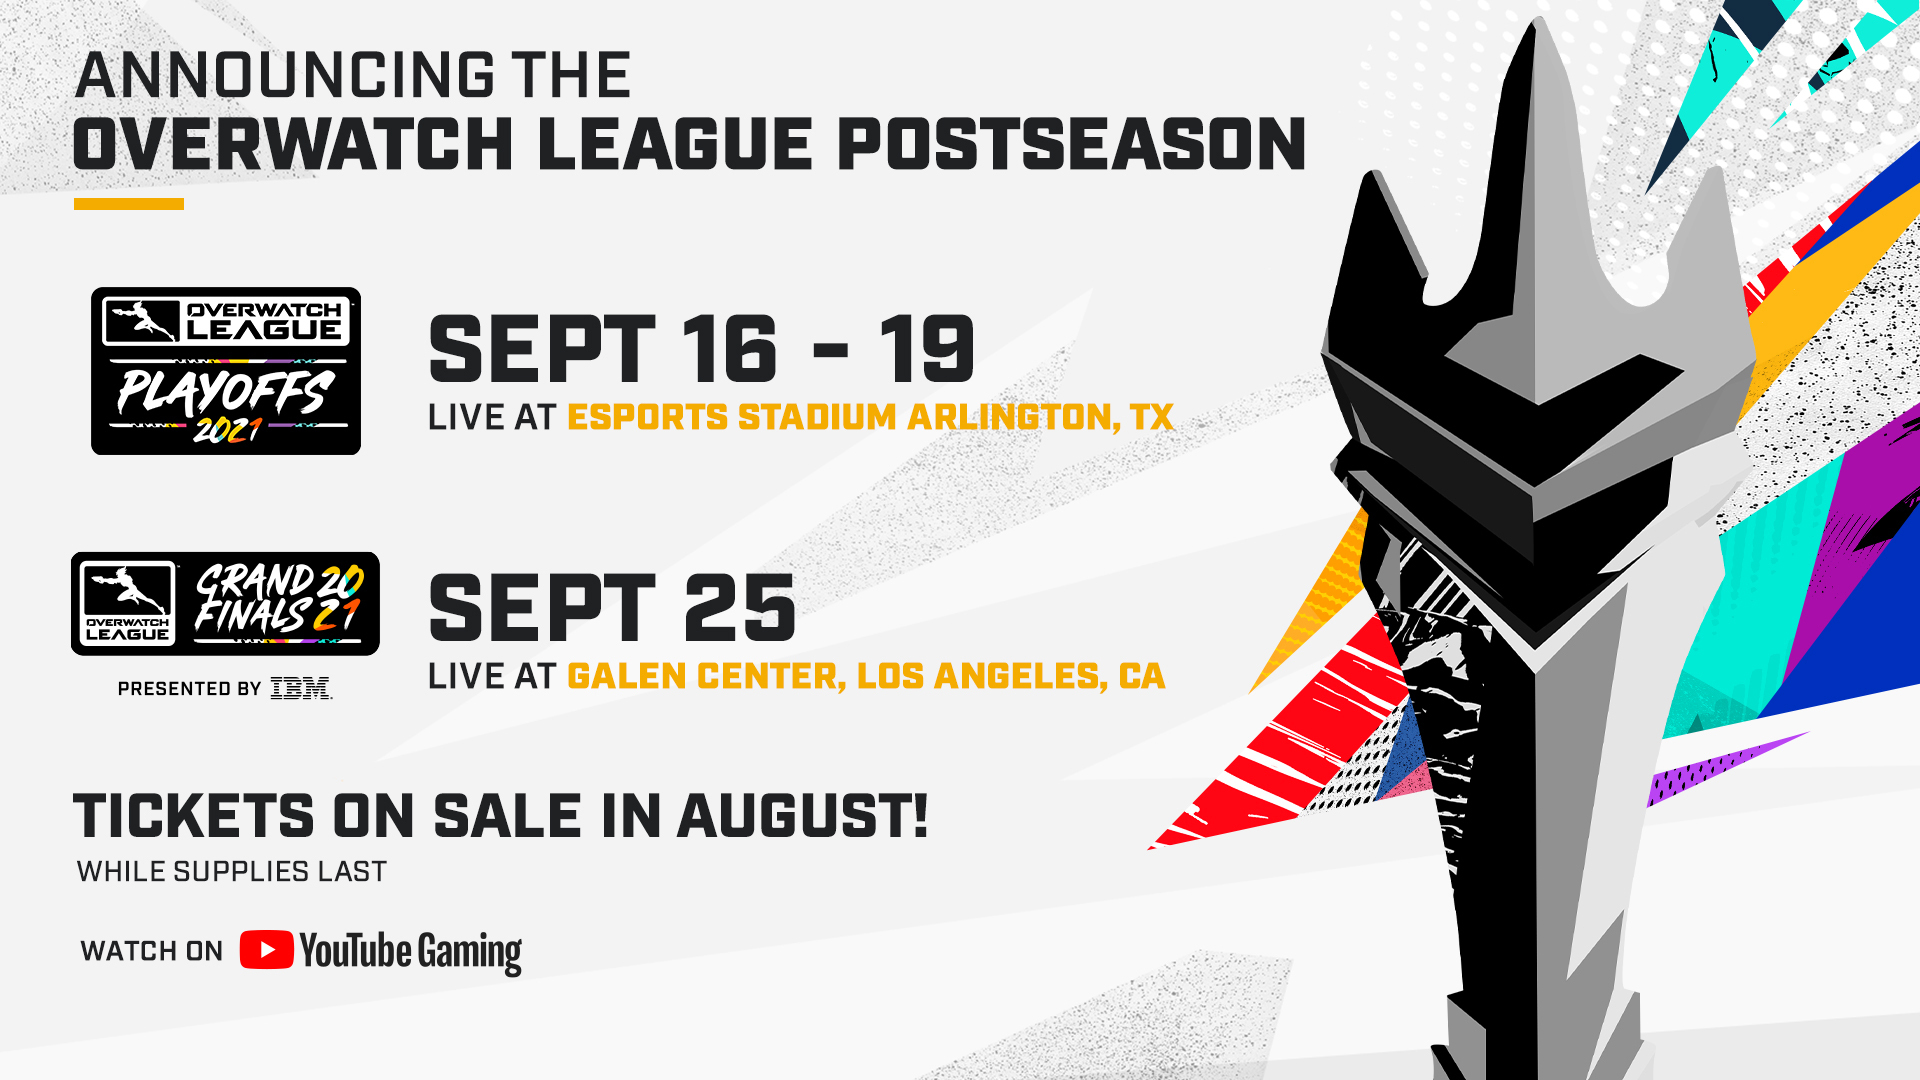 Overwatch League Grand Finals set for September 25